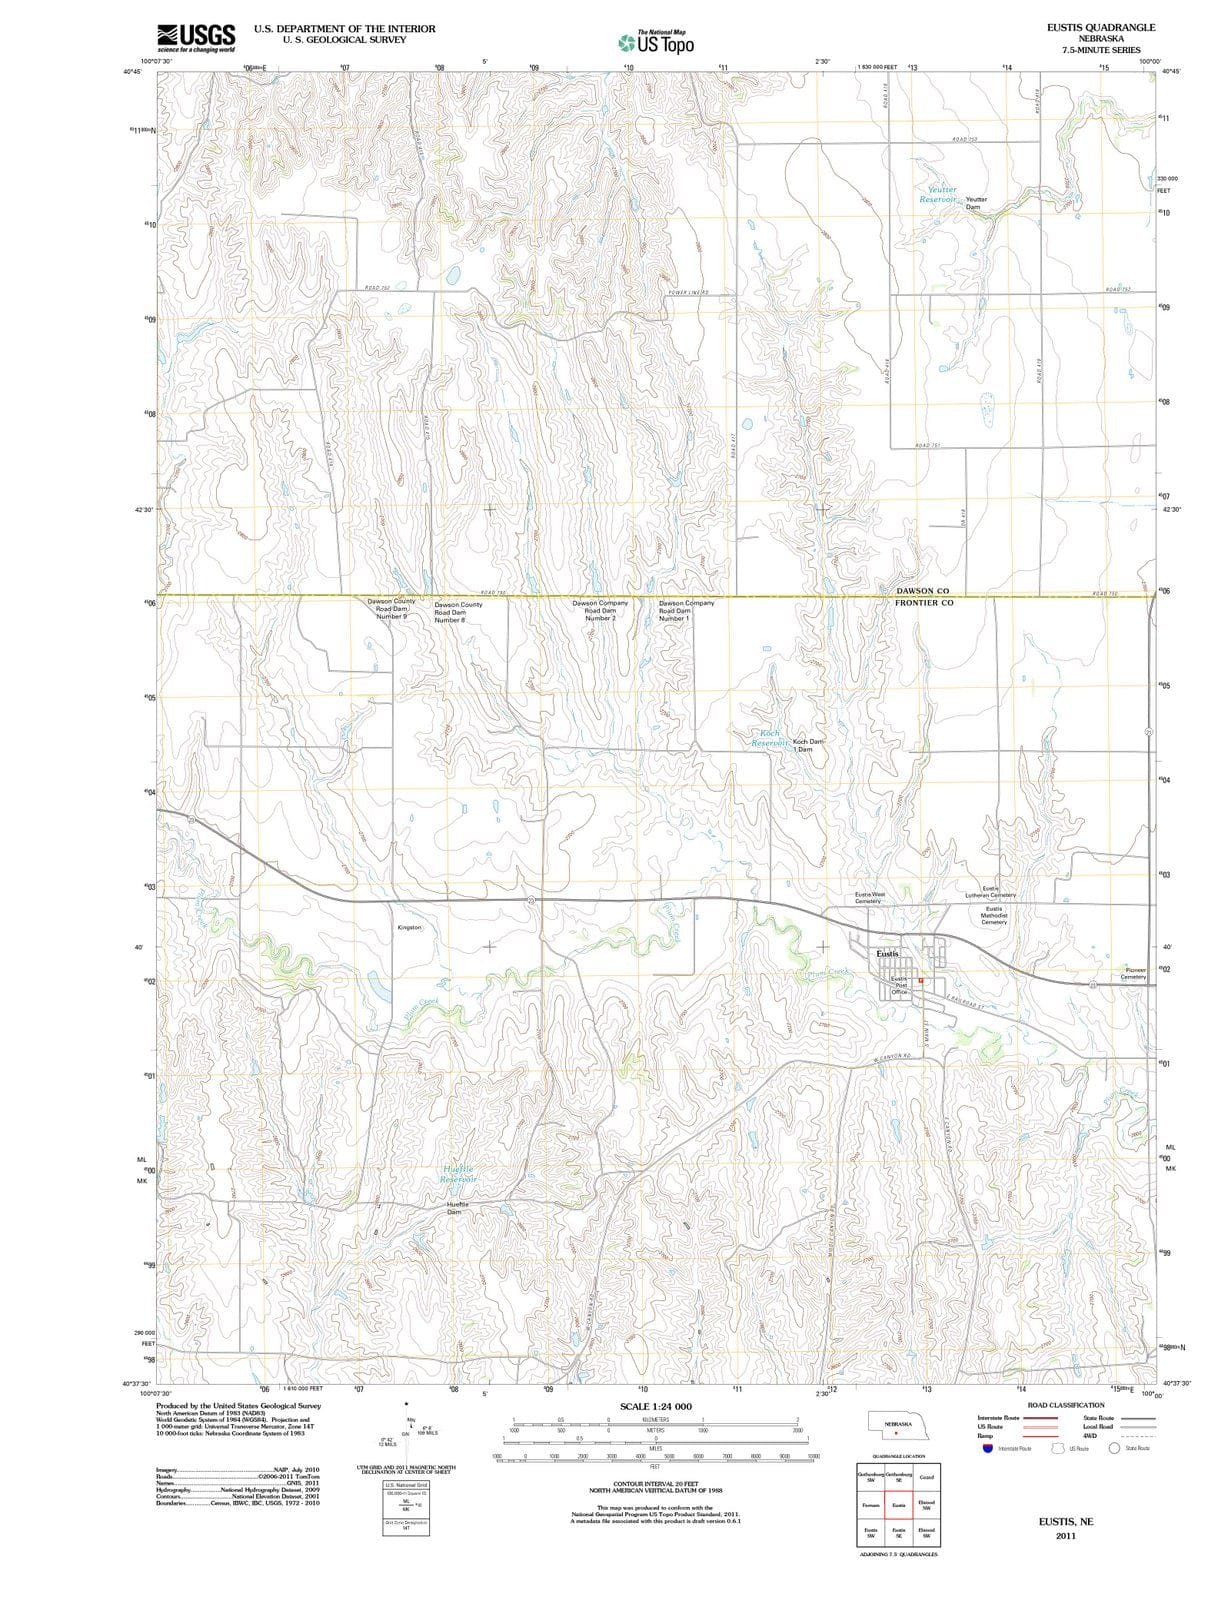 2011 Eustis, NE - Nebraska - USGS Topographic Map